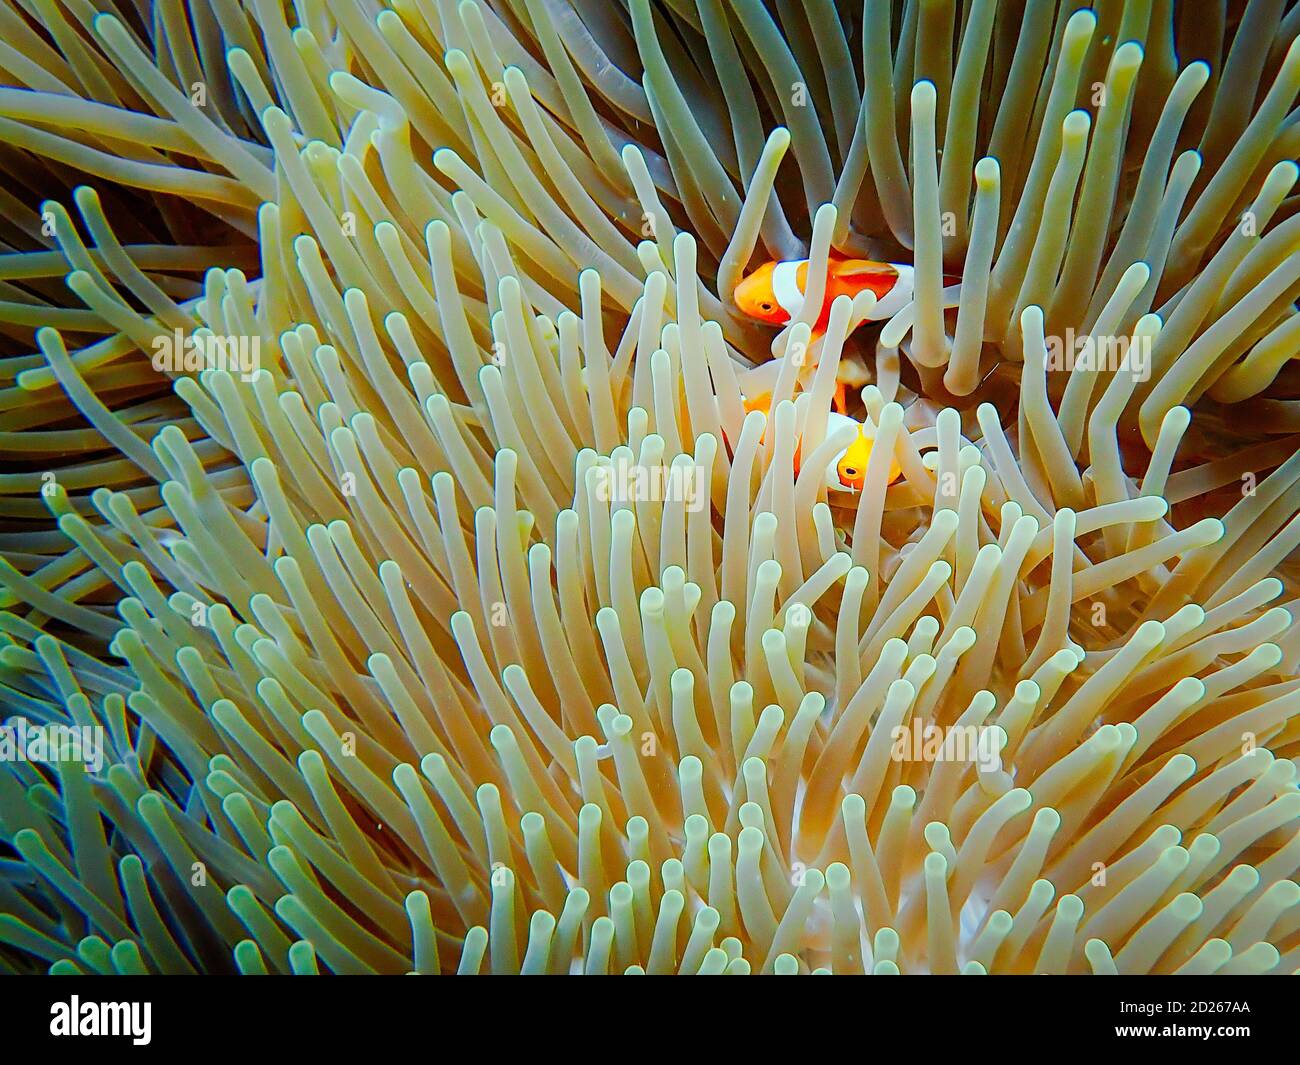 Clownfish in a sea anemone, Raja Ampat, Indonesia, Symbiotic relationship Stock Photo